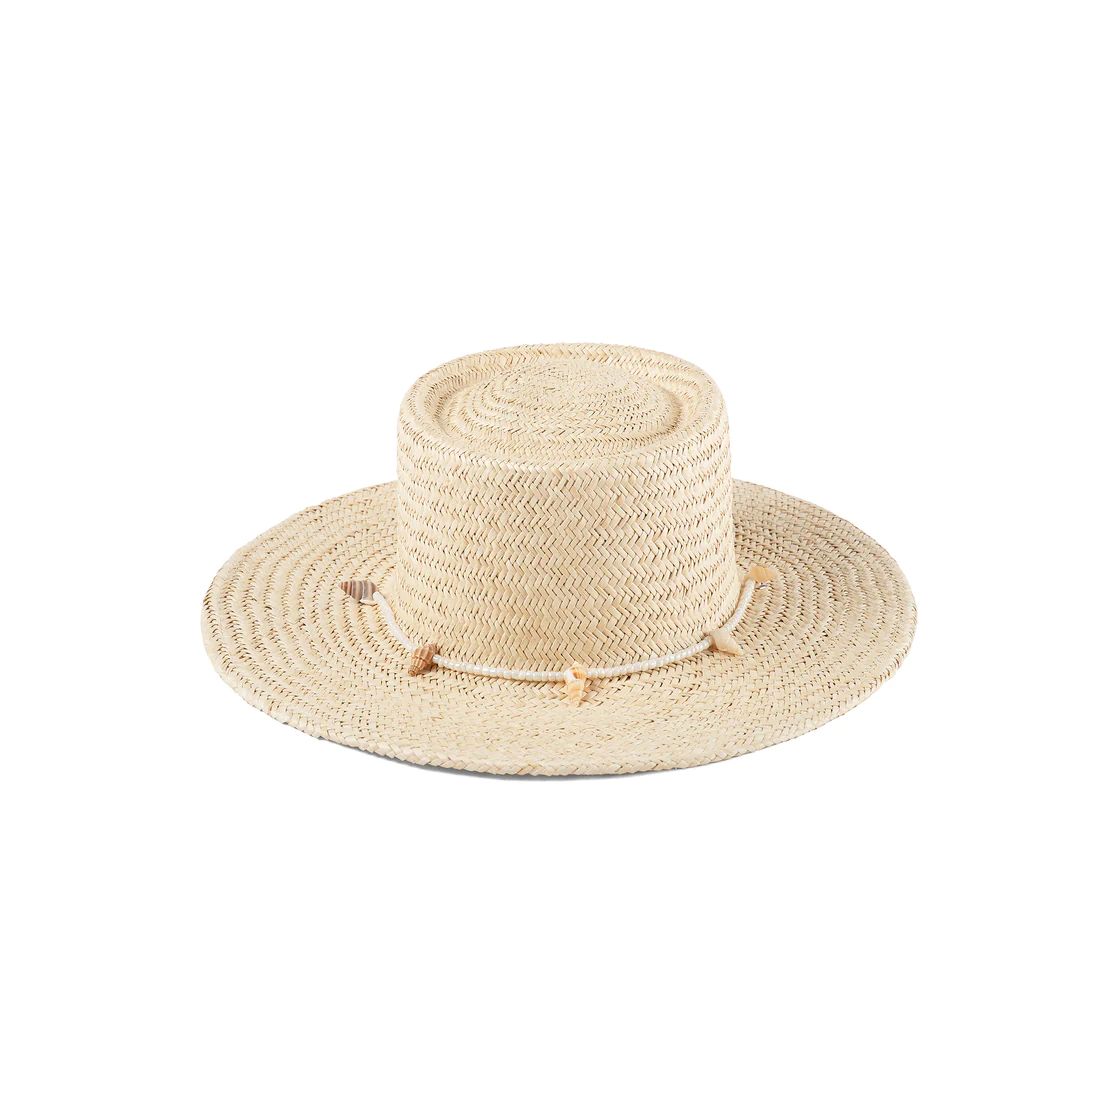 Seashells Boater - Straw Boater Hat in Natural | Lack of Color US | Lack of Color